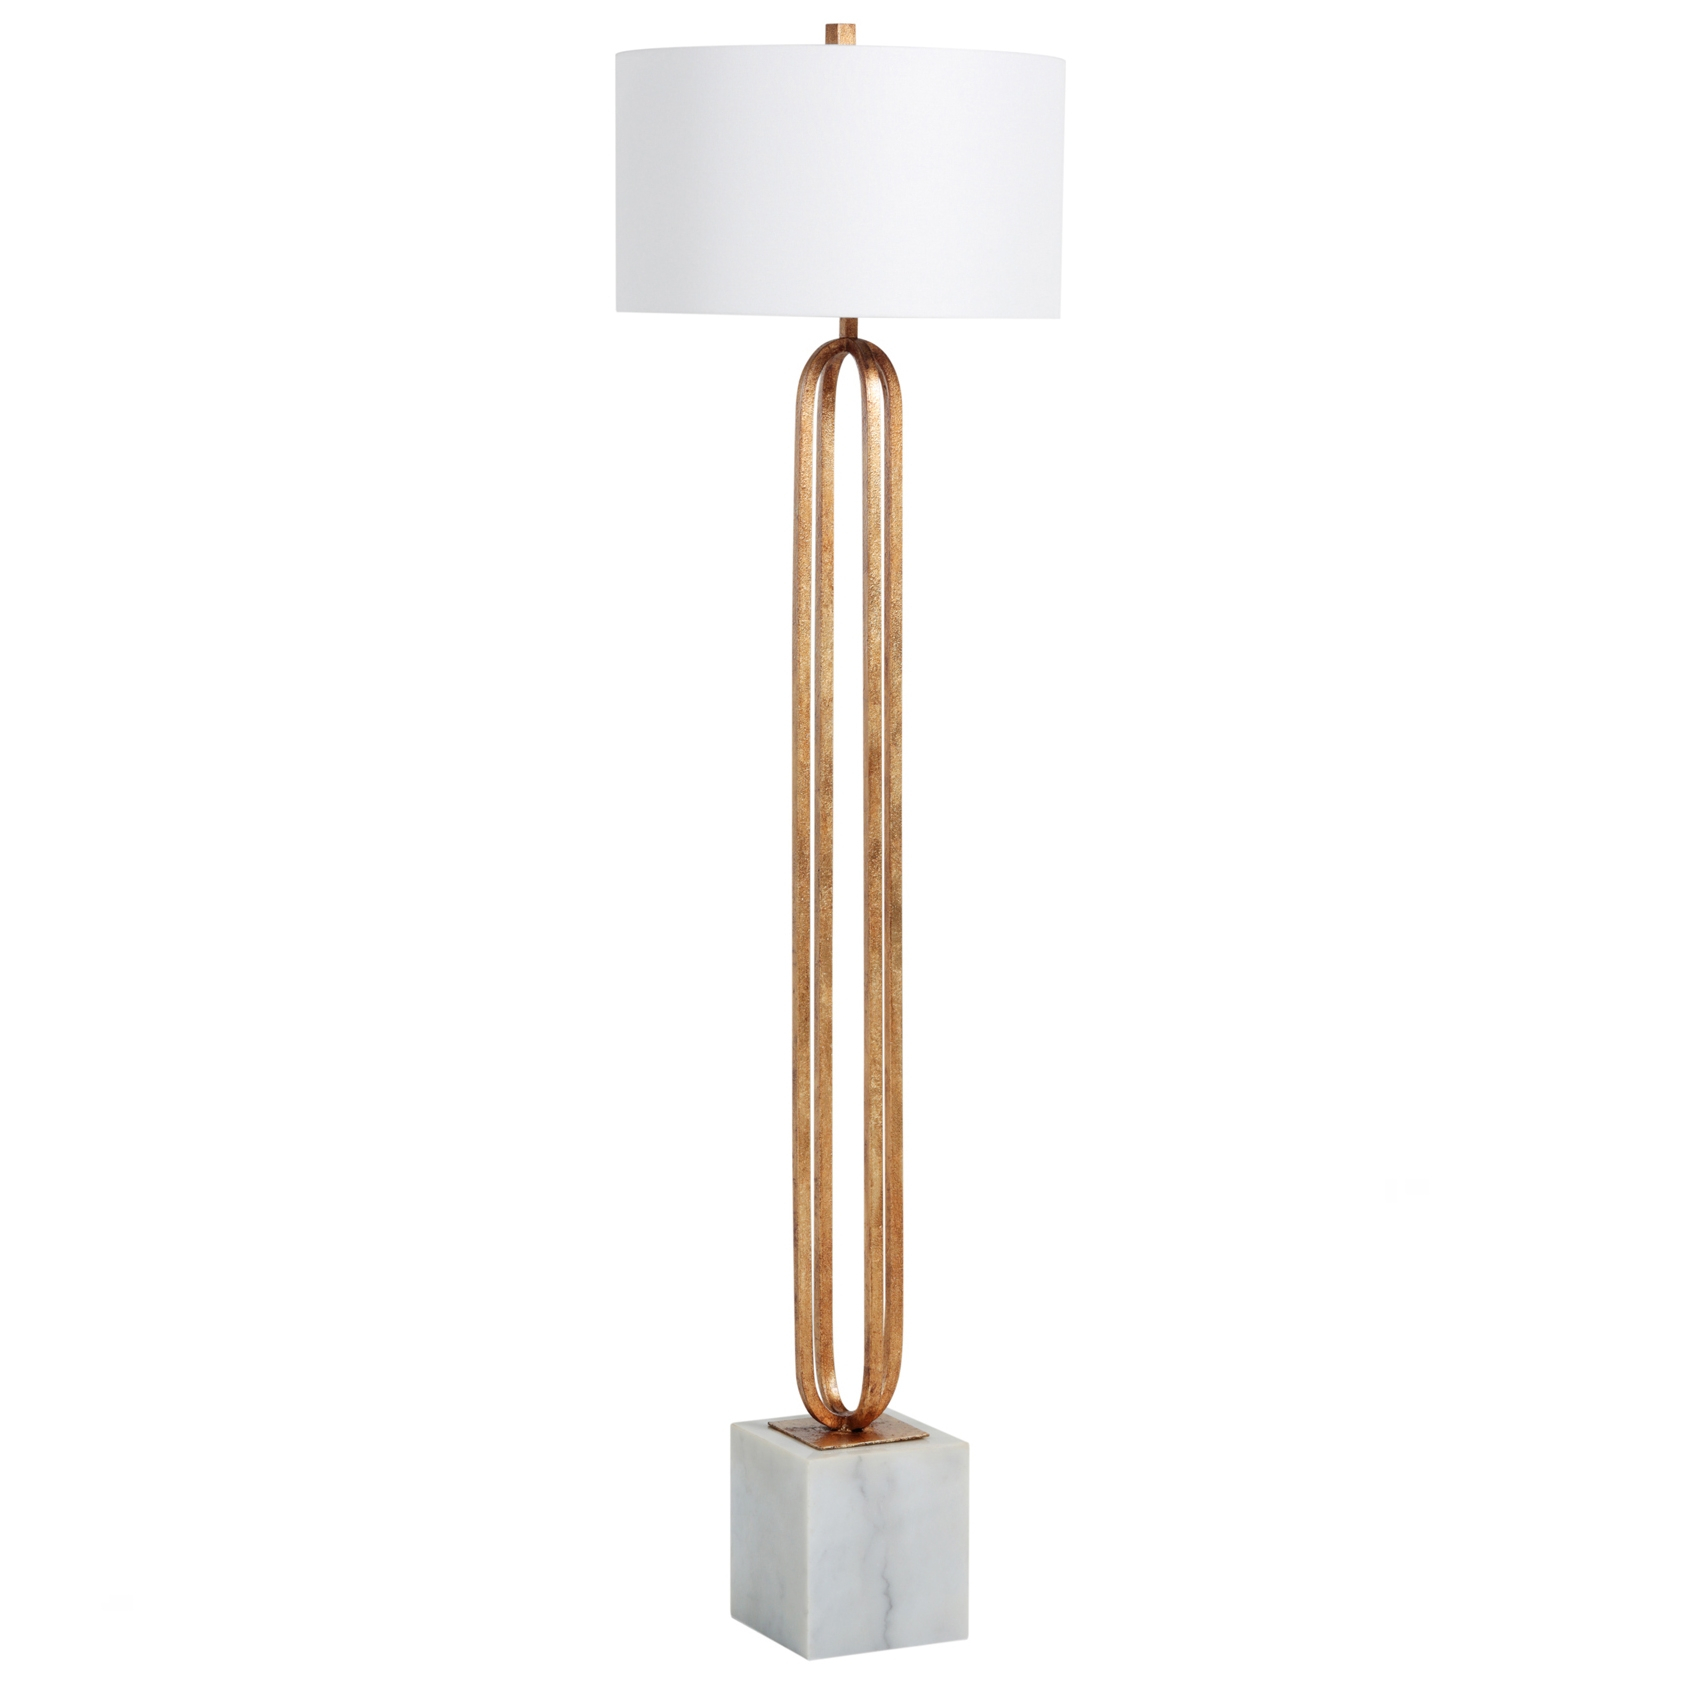 Gab Tanya Floor Lamp In 2019 Products Floor Lamp Lamp regarding sizing 1692 X 1692